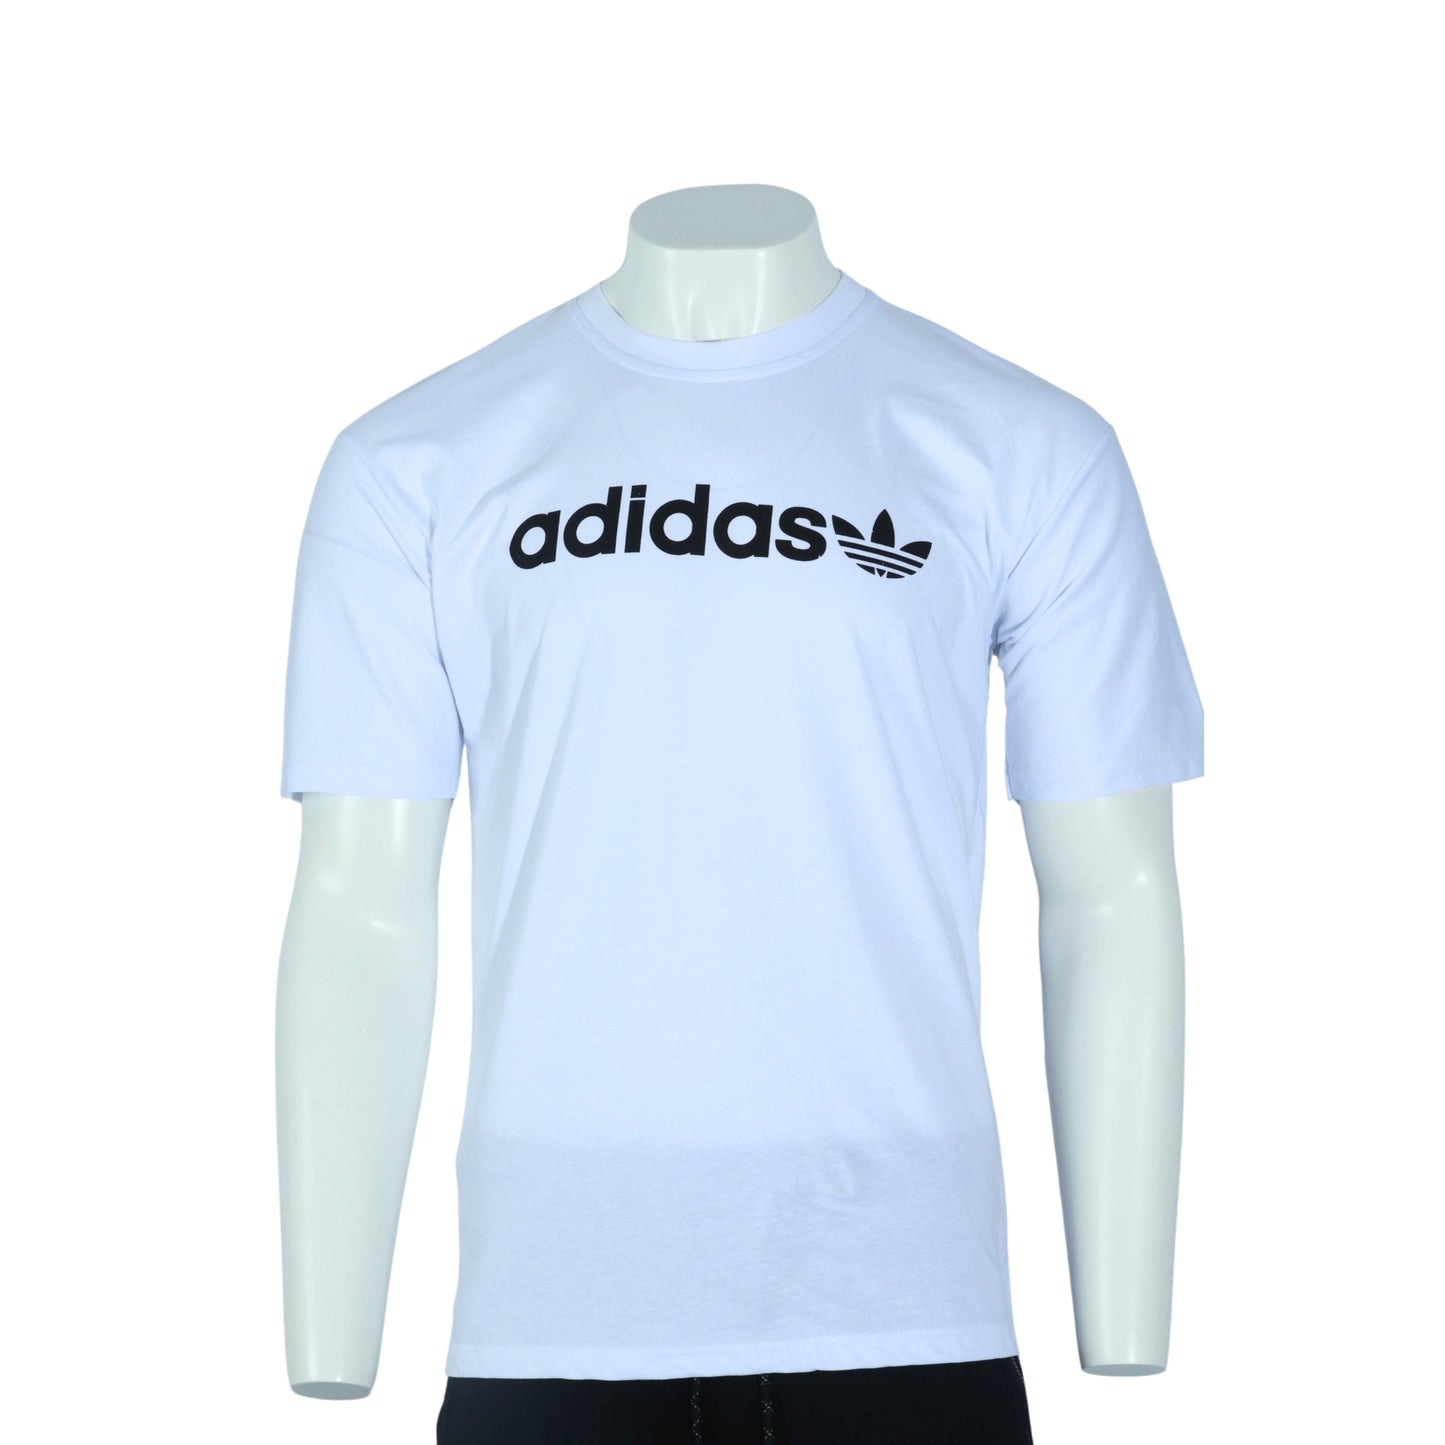 ADIDAS Mens Tops S / White ADIDAS - Round Neck T-shirt